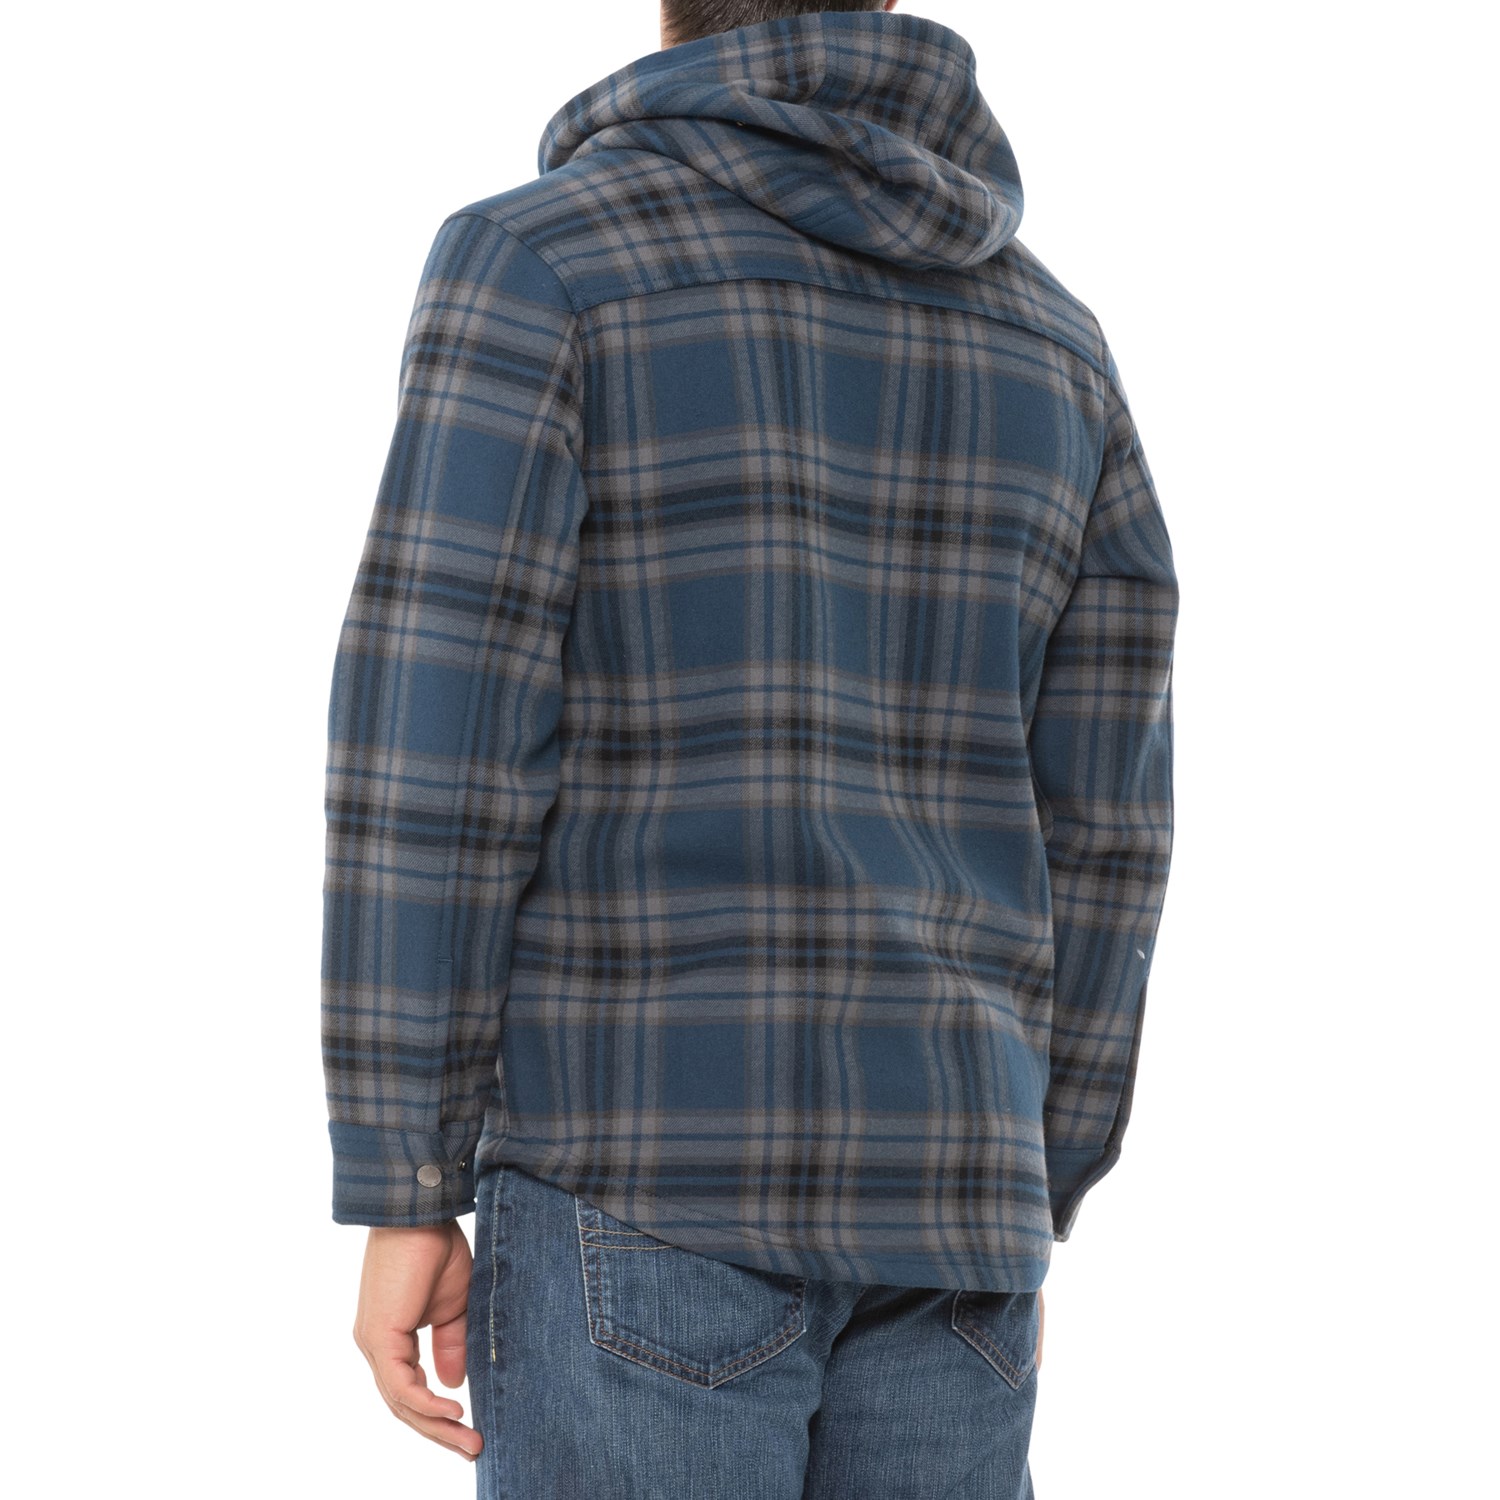 Swiss Alps Bonded Flannel Shirt Jacket (For Men) - Save 62%